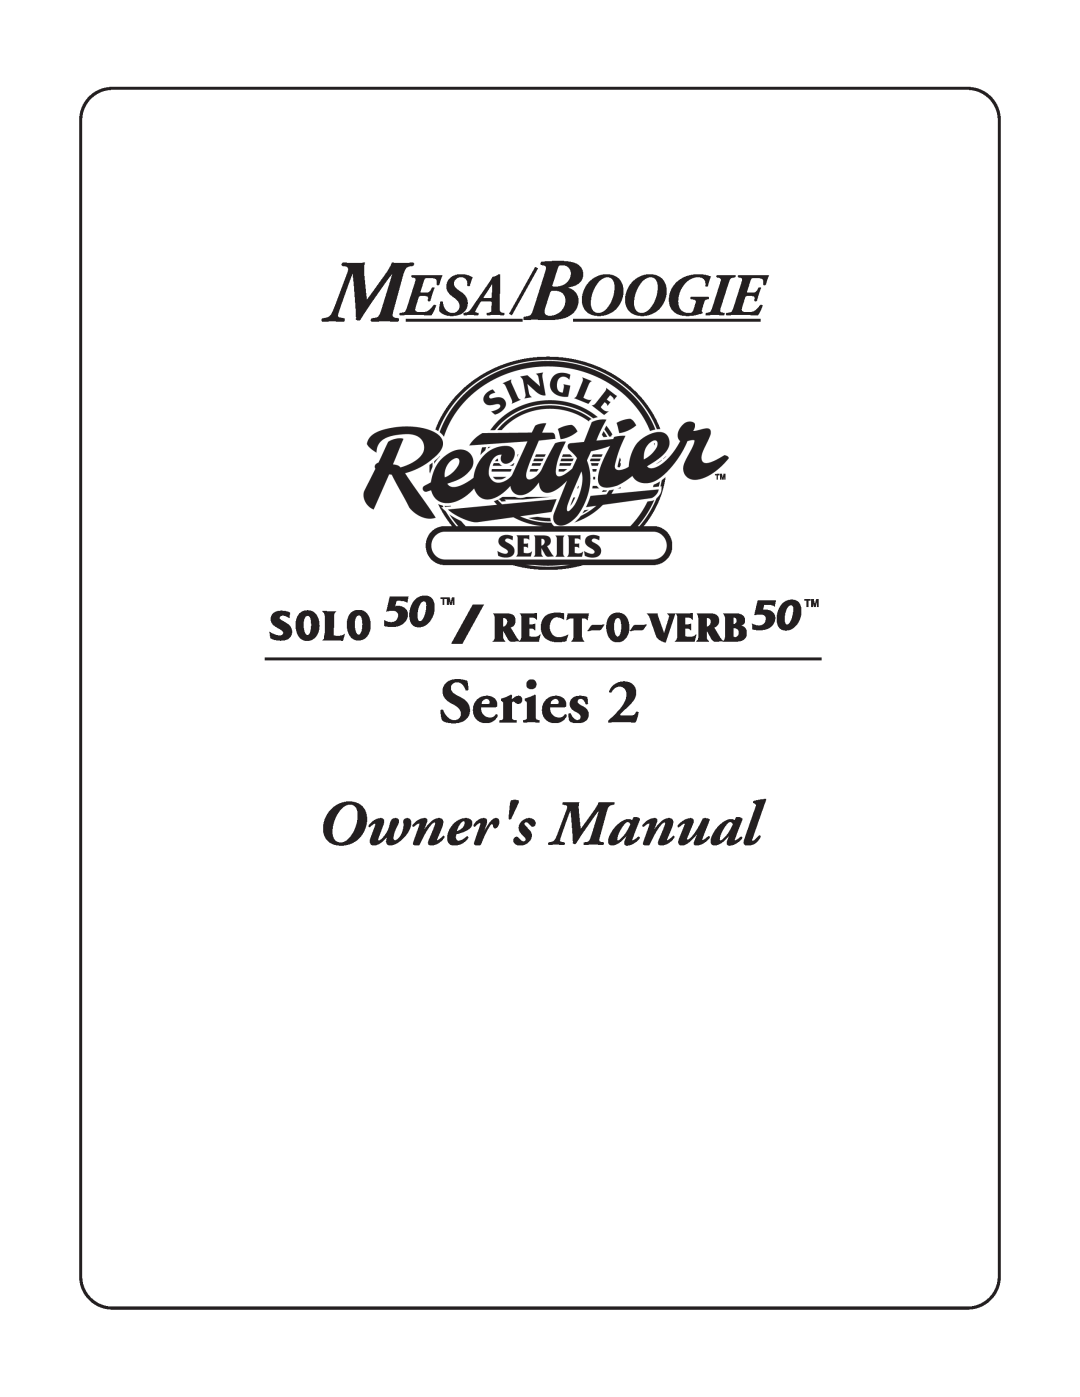 Mesa/Boogie pmn owner manual Series, Mesa Boogie 